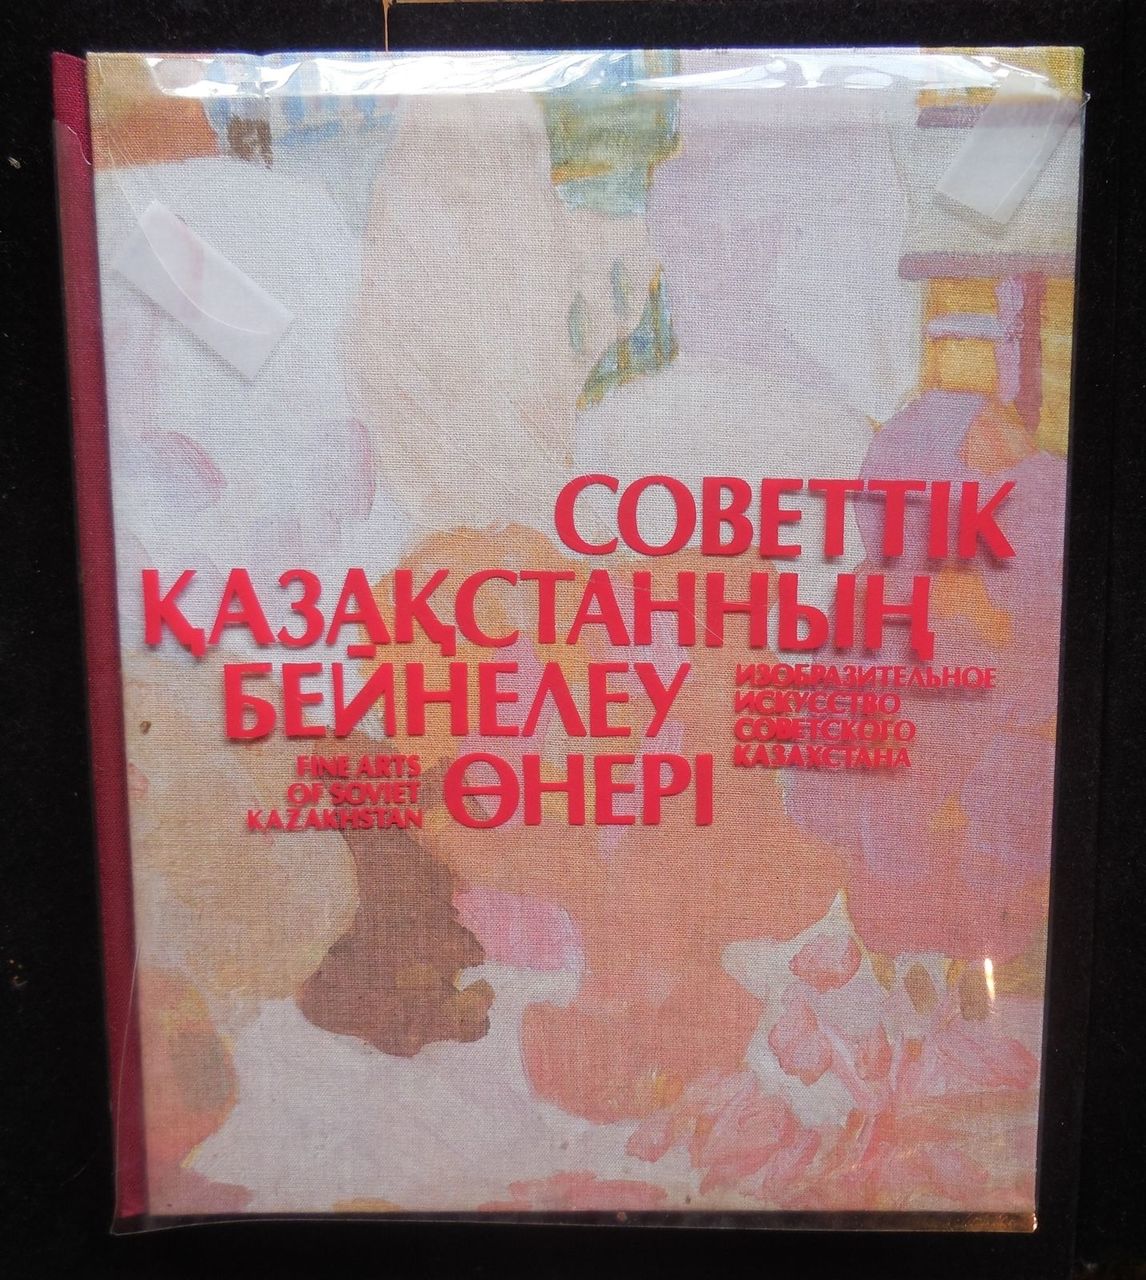 FINE ARTS OF SOVIET KAZAKHSTAN, 1990 Painting Sculpture Illustrated Color b&w